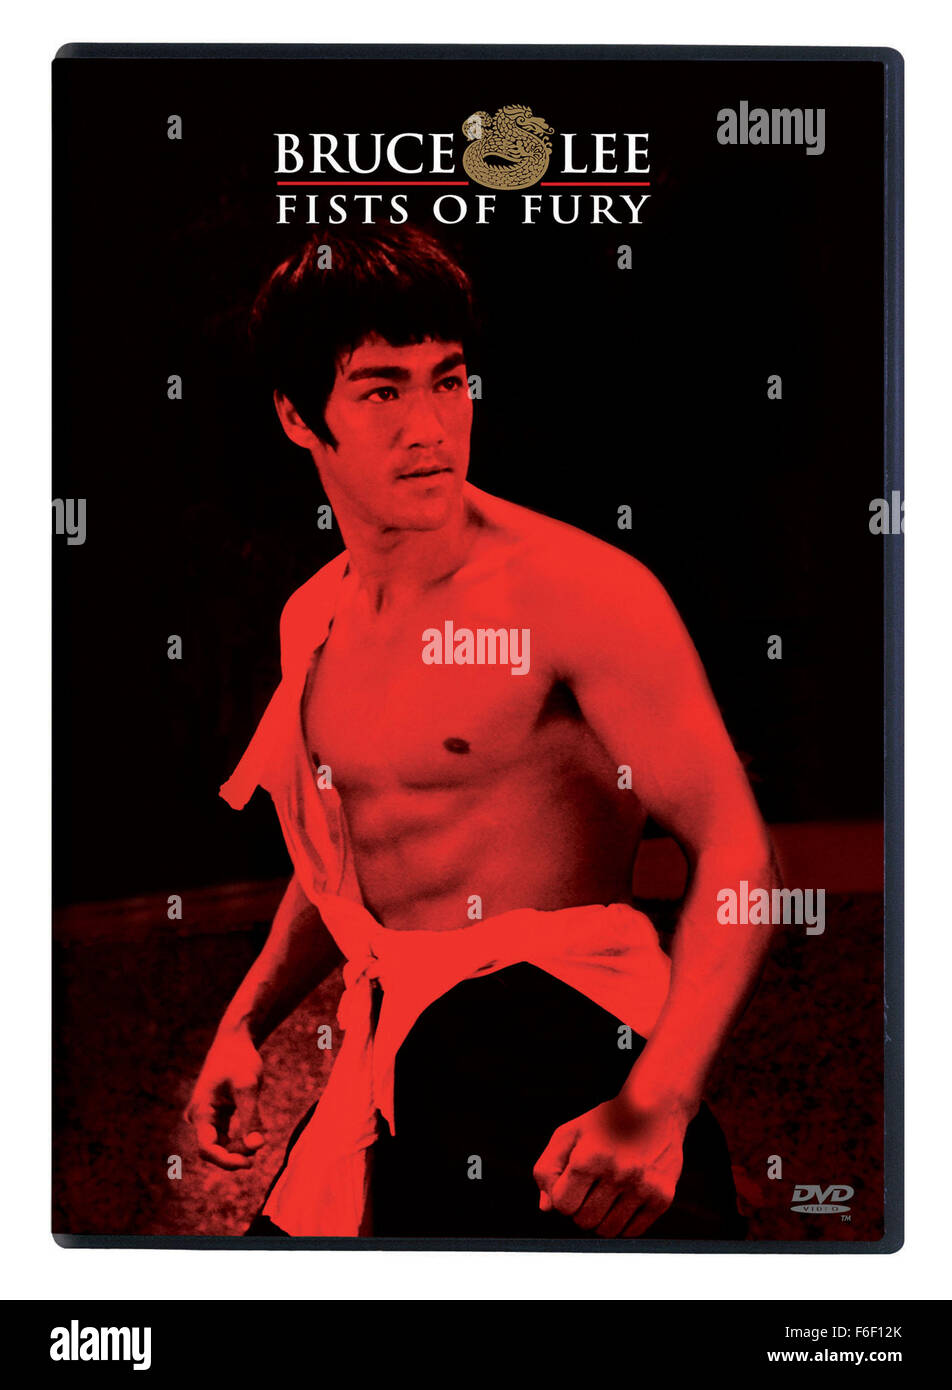 03 Oct, 1971; Hong Kong, China; el legendario actor de artes marciales Bruce Lee estrellas como Cheng Chao-an en el Golden Harvest Company Ltd., el drama de acción "furia". Foto de stock